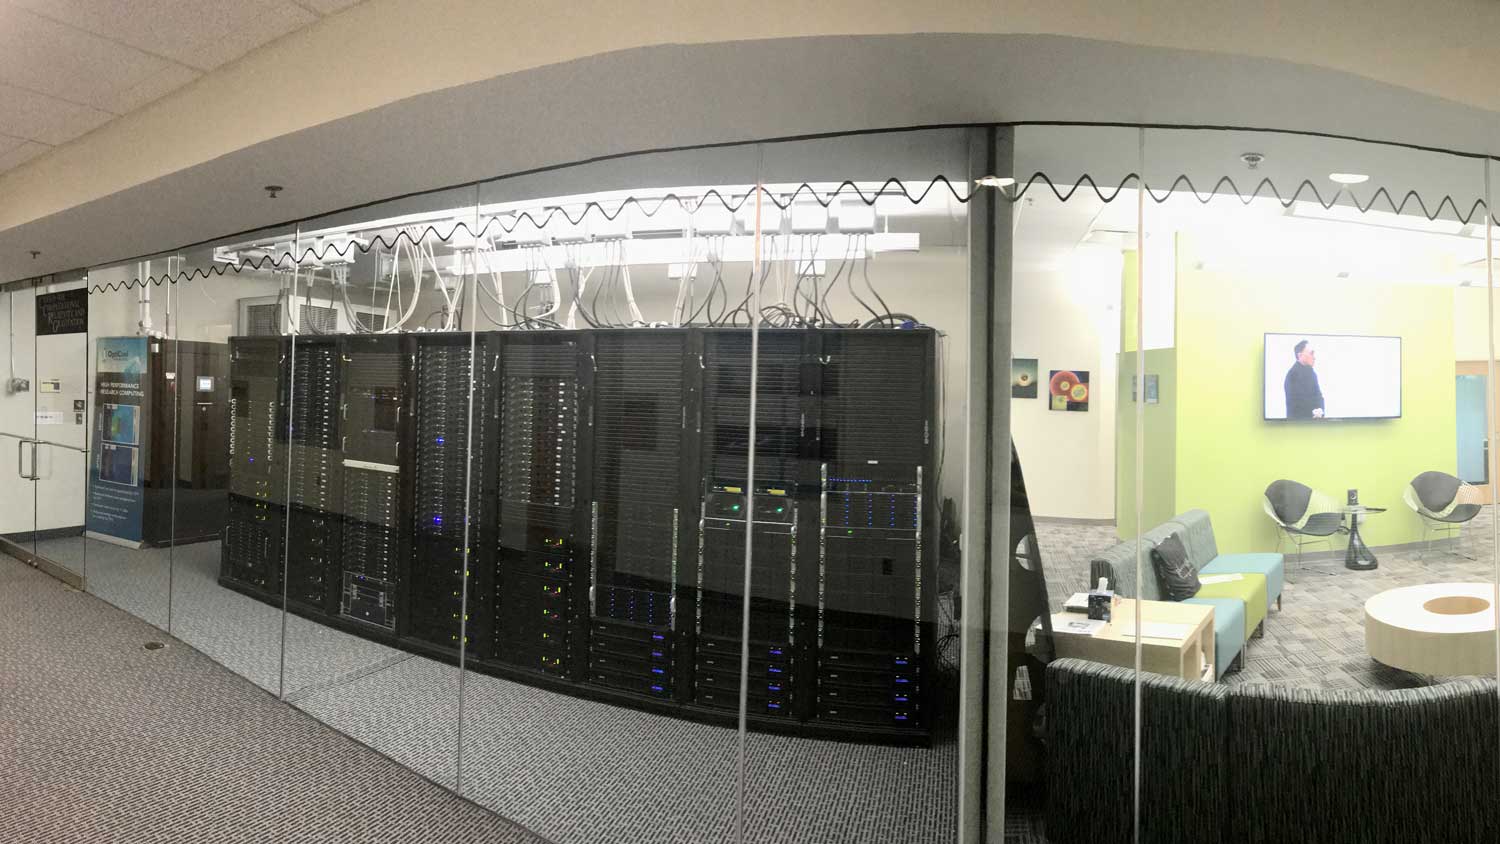 Glass walled room looking at server racks